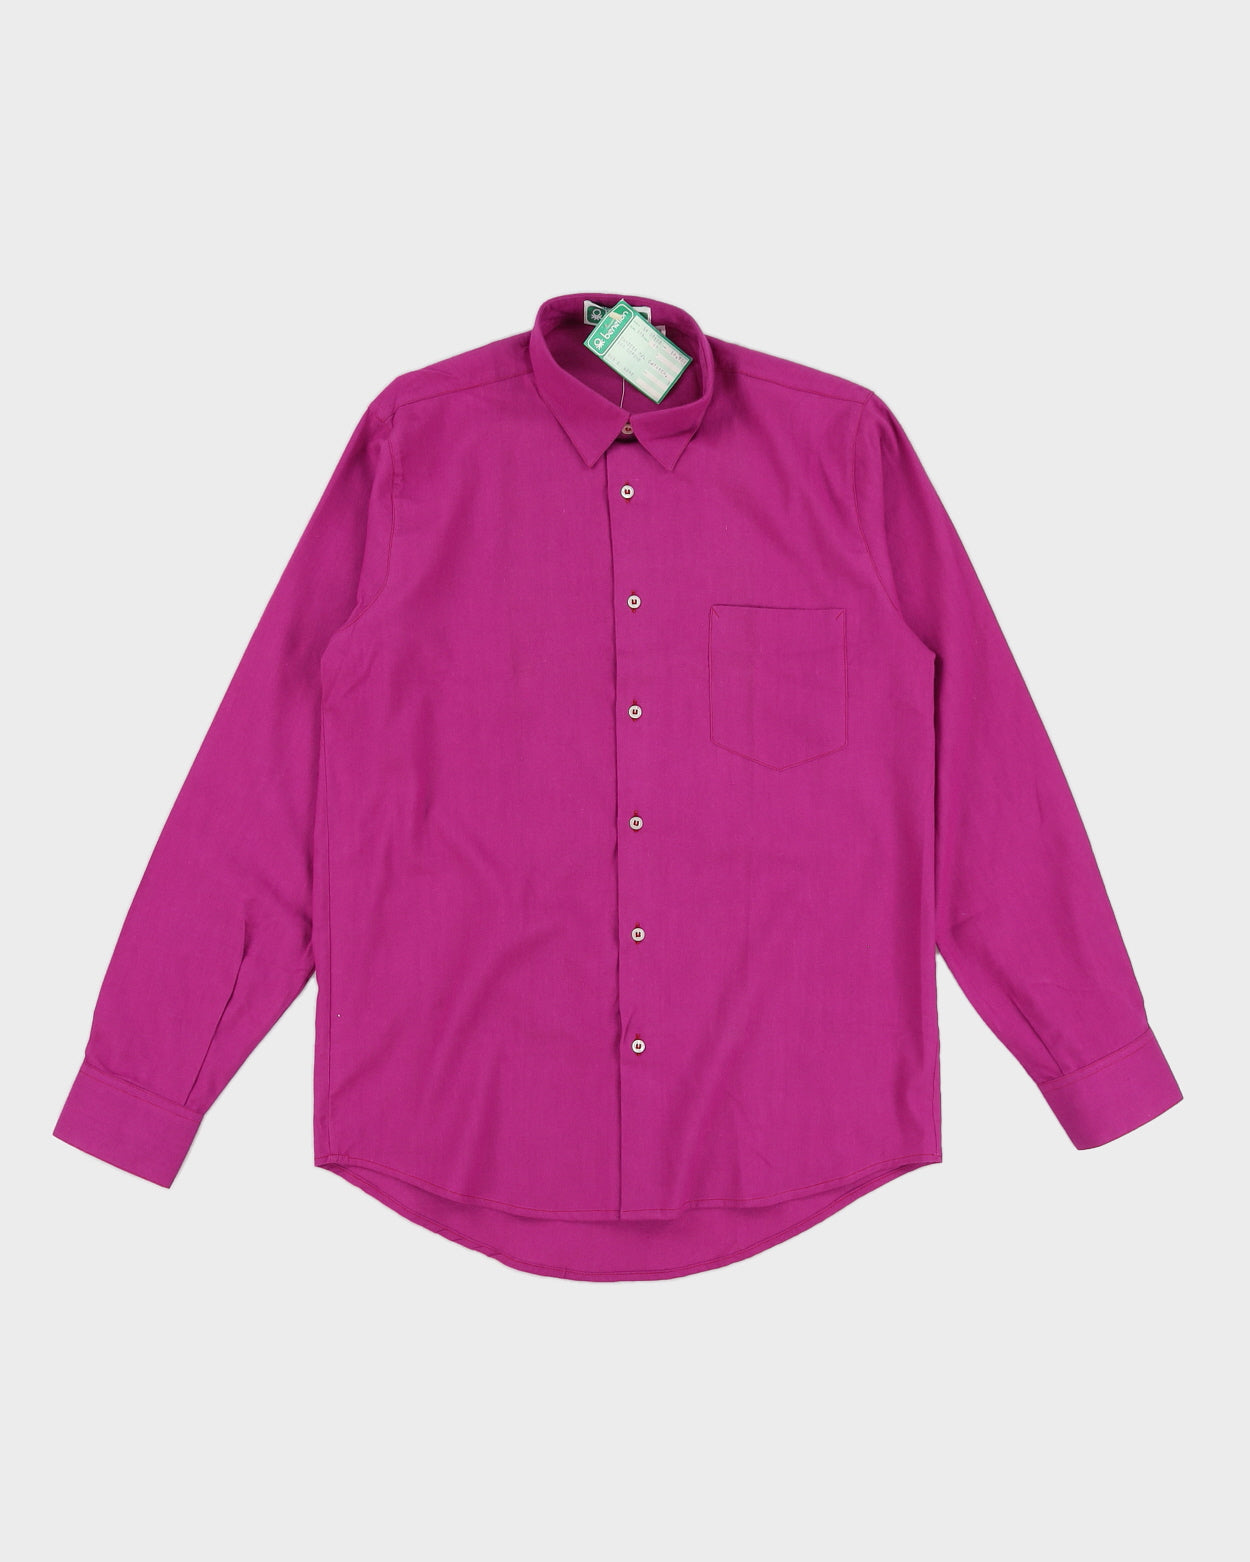 Vintage 70s Benetton Purple Dress Shirt - M